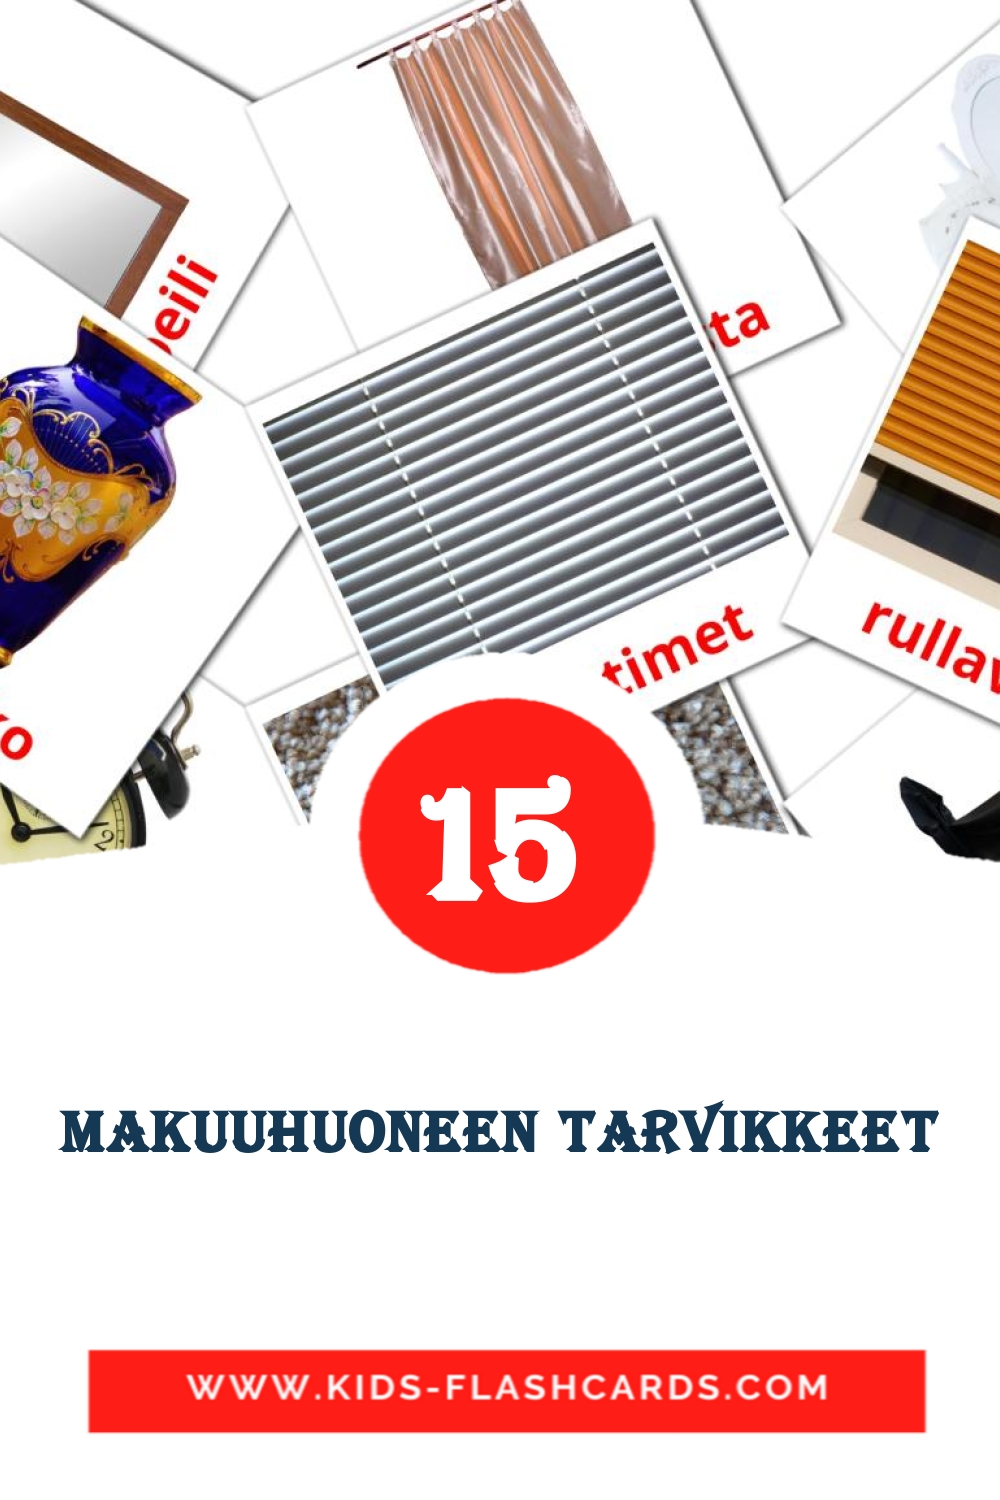 15 carte illustrate di Makuuhuoneen tarvikkeet per la scuola materna in finlandese